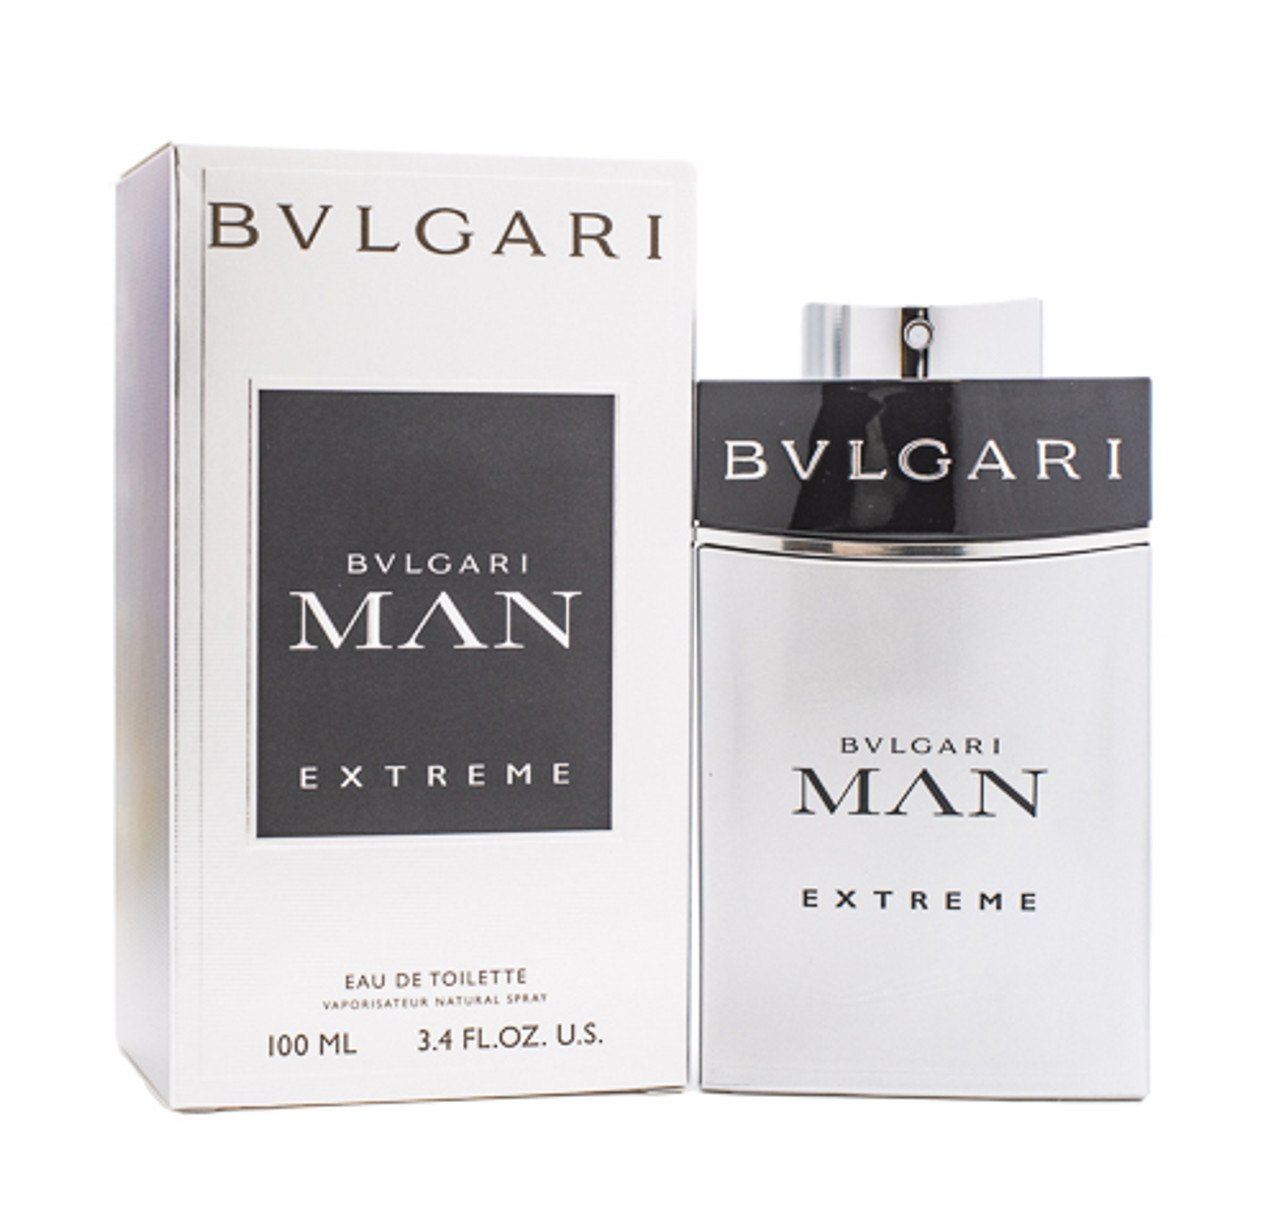  Bvlgari Man Extreme by Bvlgari 3.4 oz Eau de Toilette